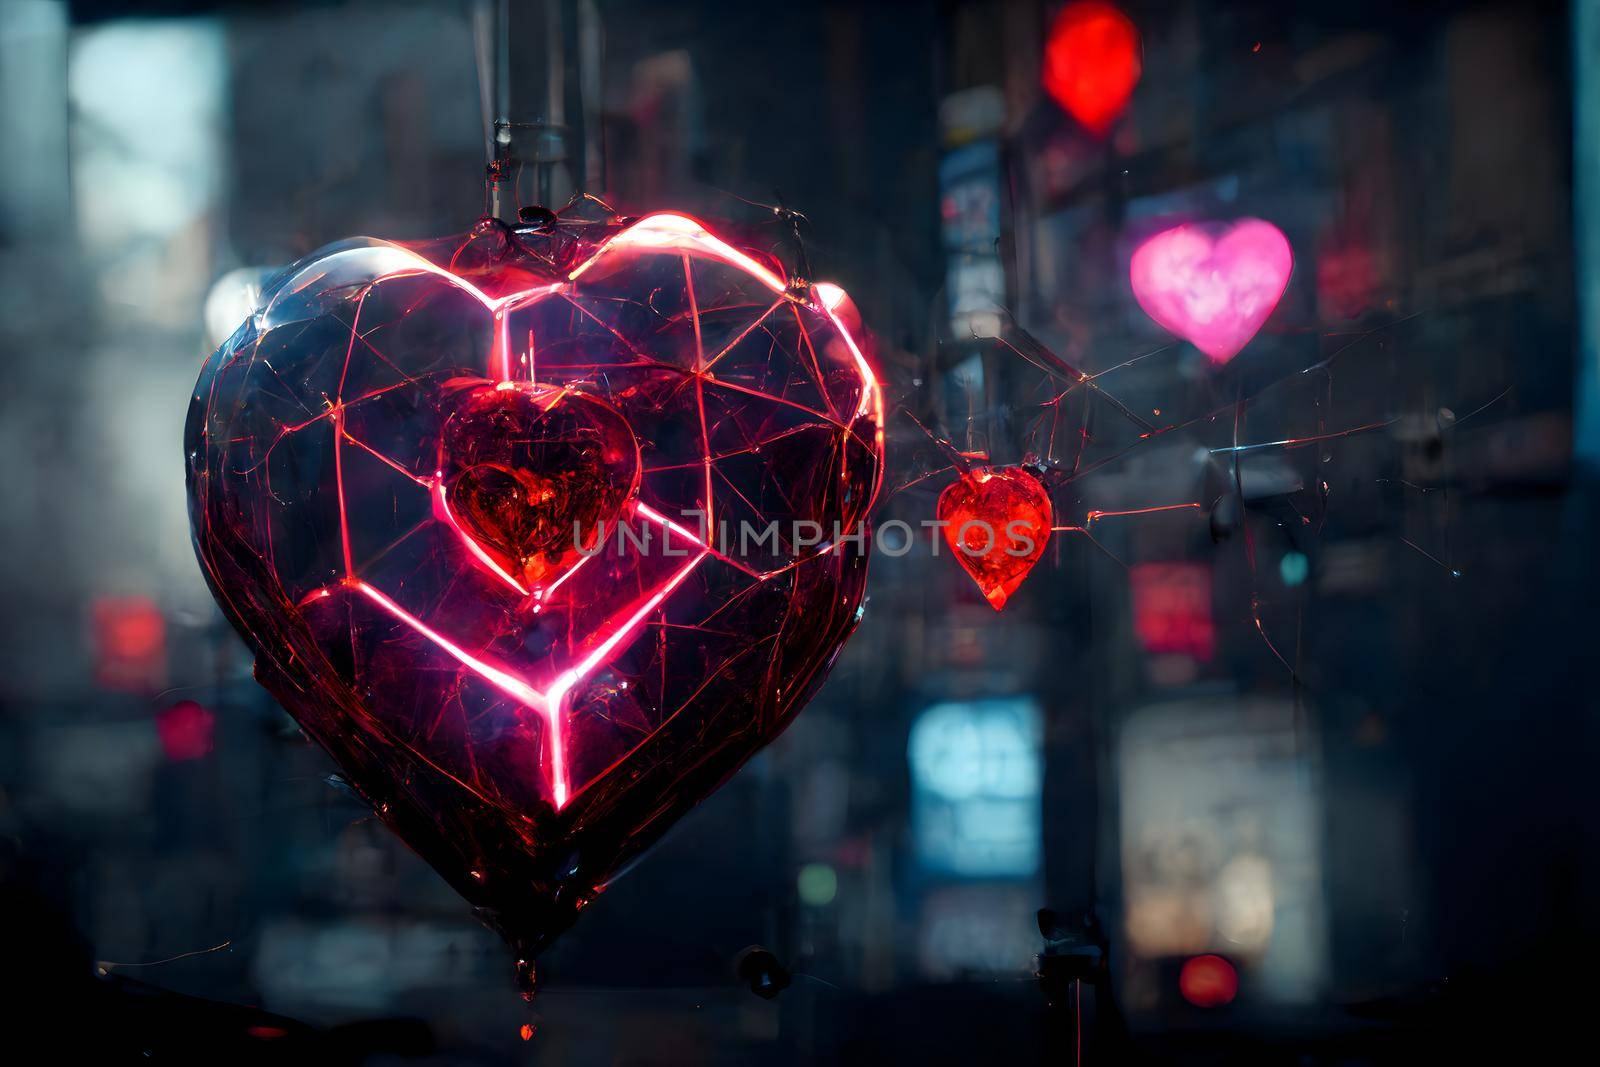 cyberpunk neon high-tech heart in night city environment, neural network generated art painting by z1b